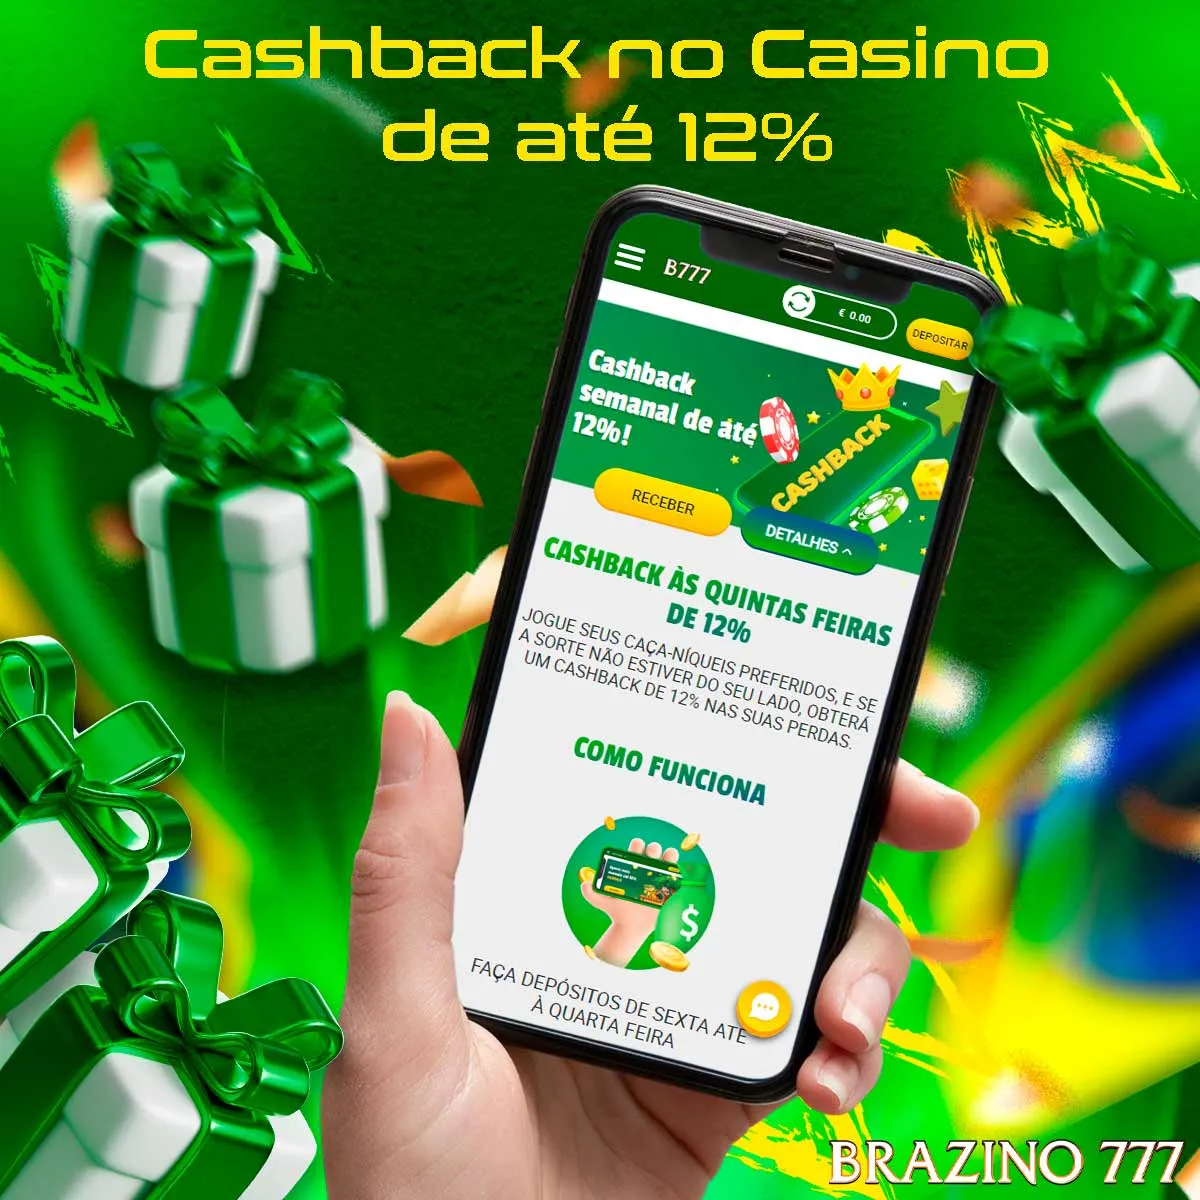 Cashback no Casino Brazino777